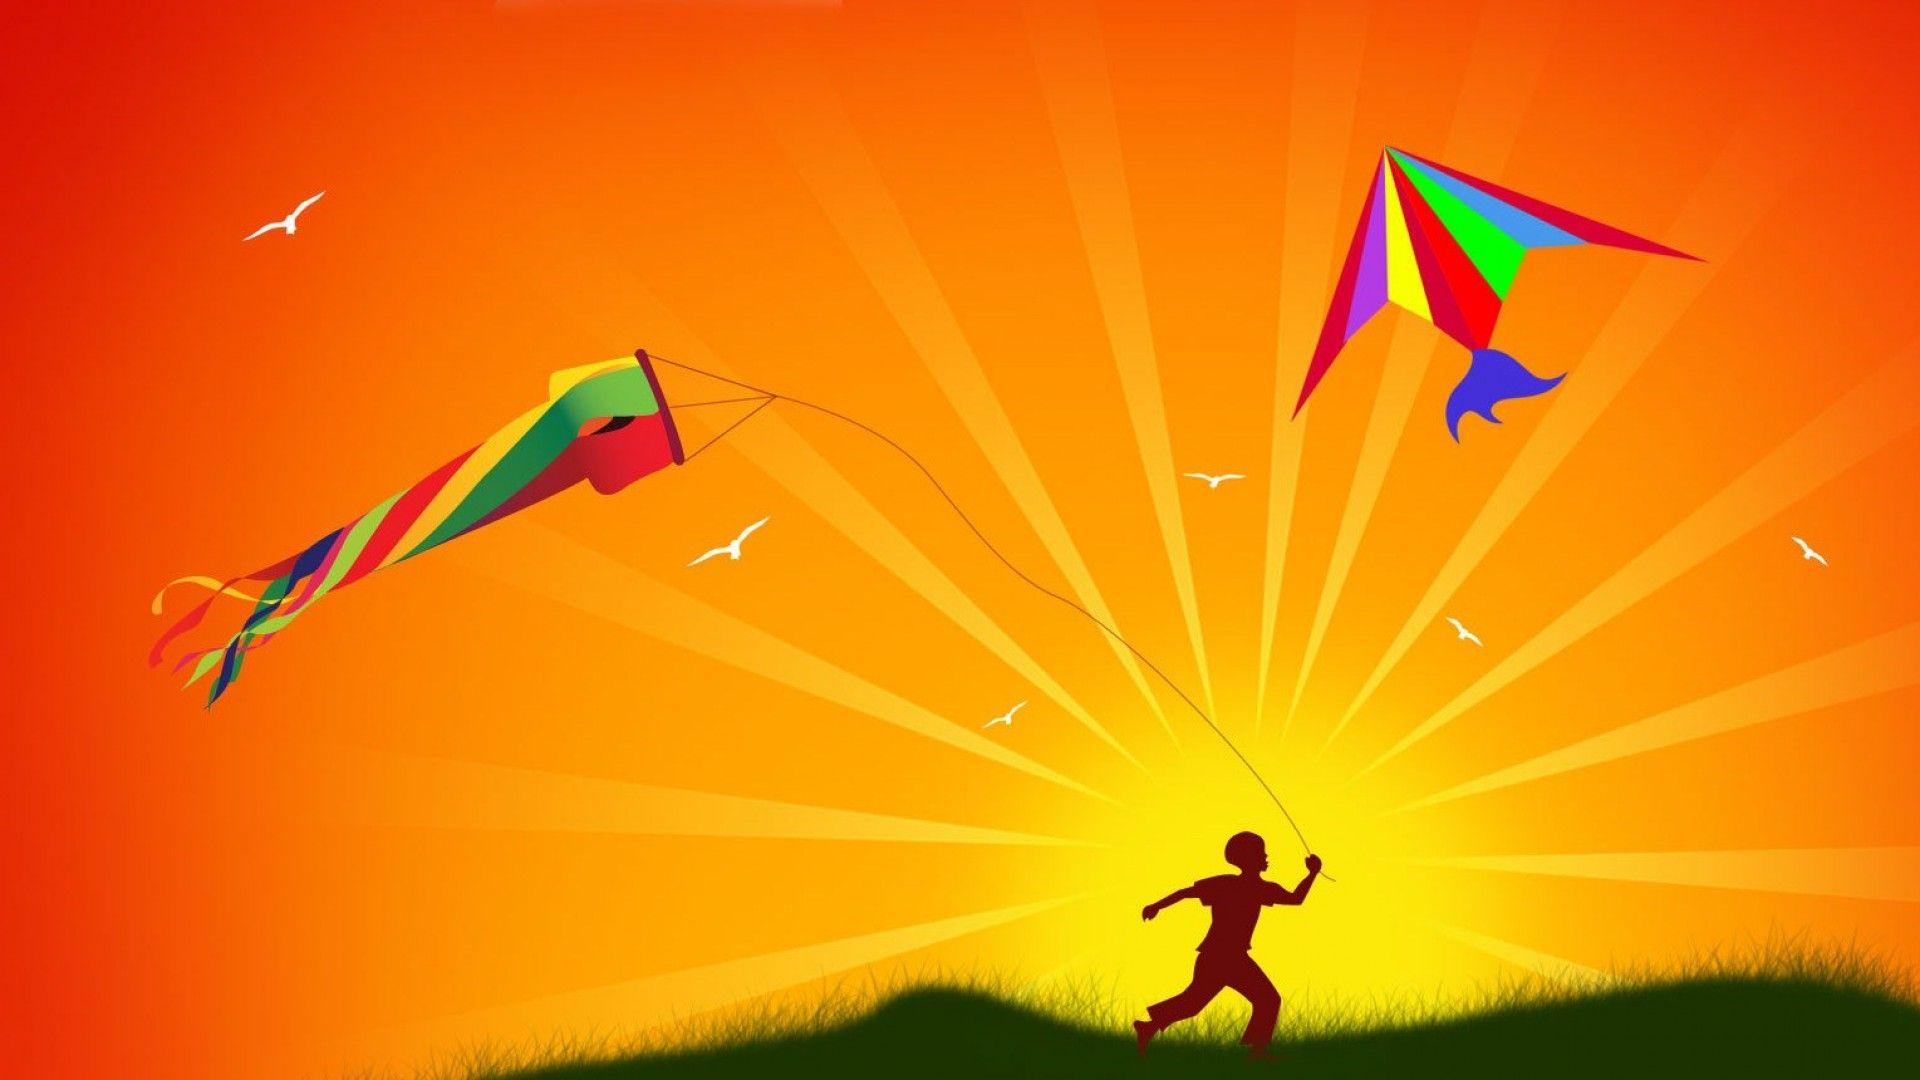 Kite Flying wallpaper with HD Quality. #kiteFlying #kiteHD #kite #hd